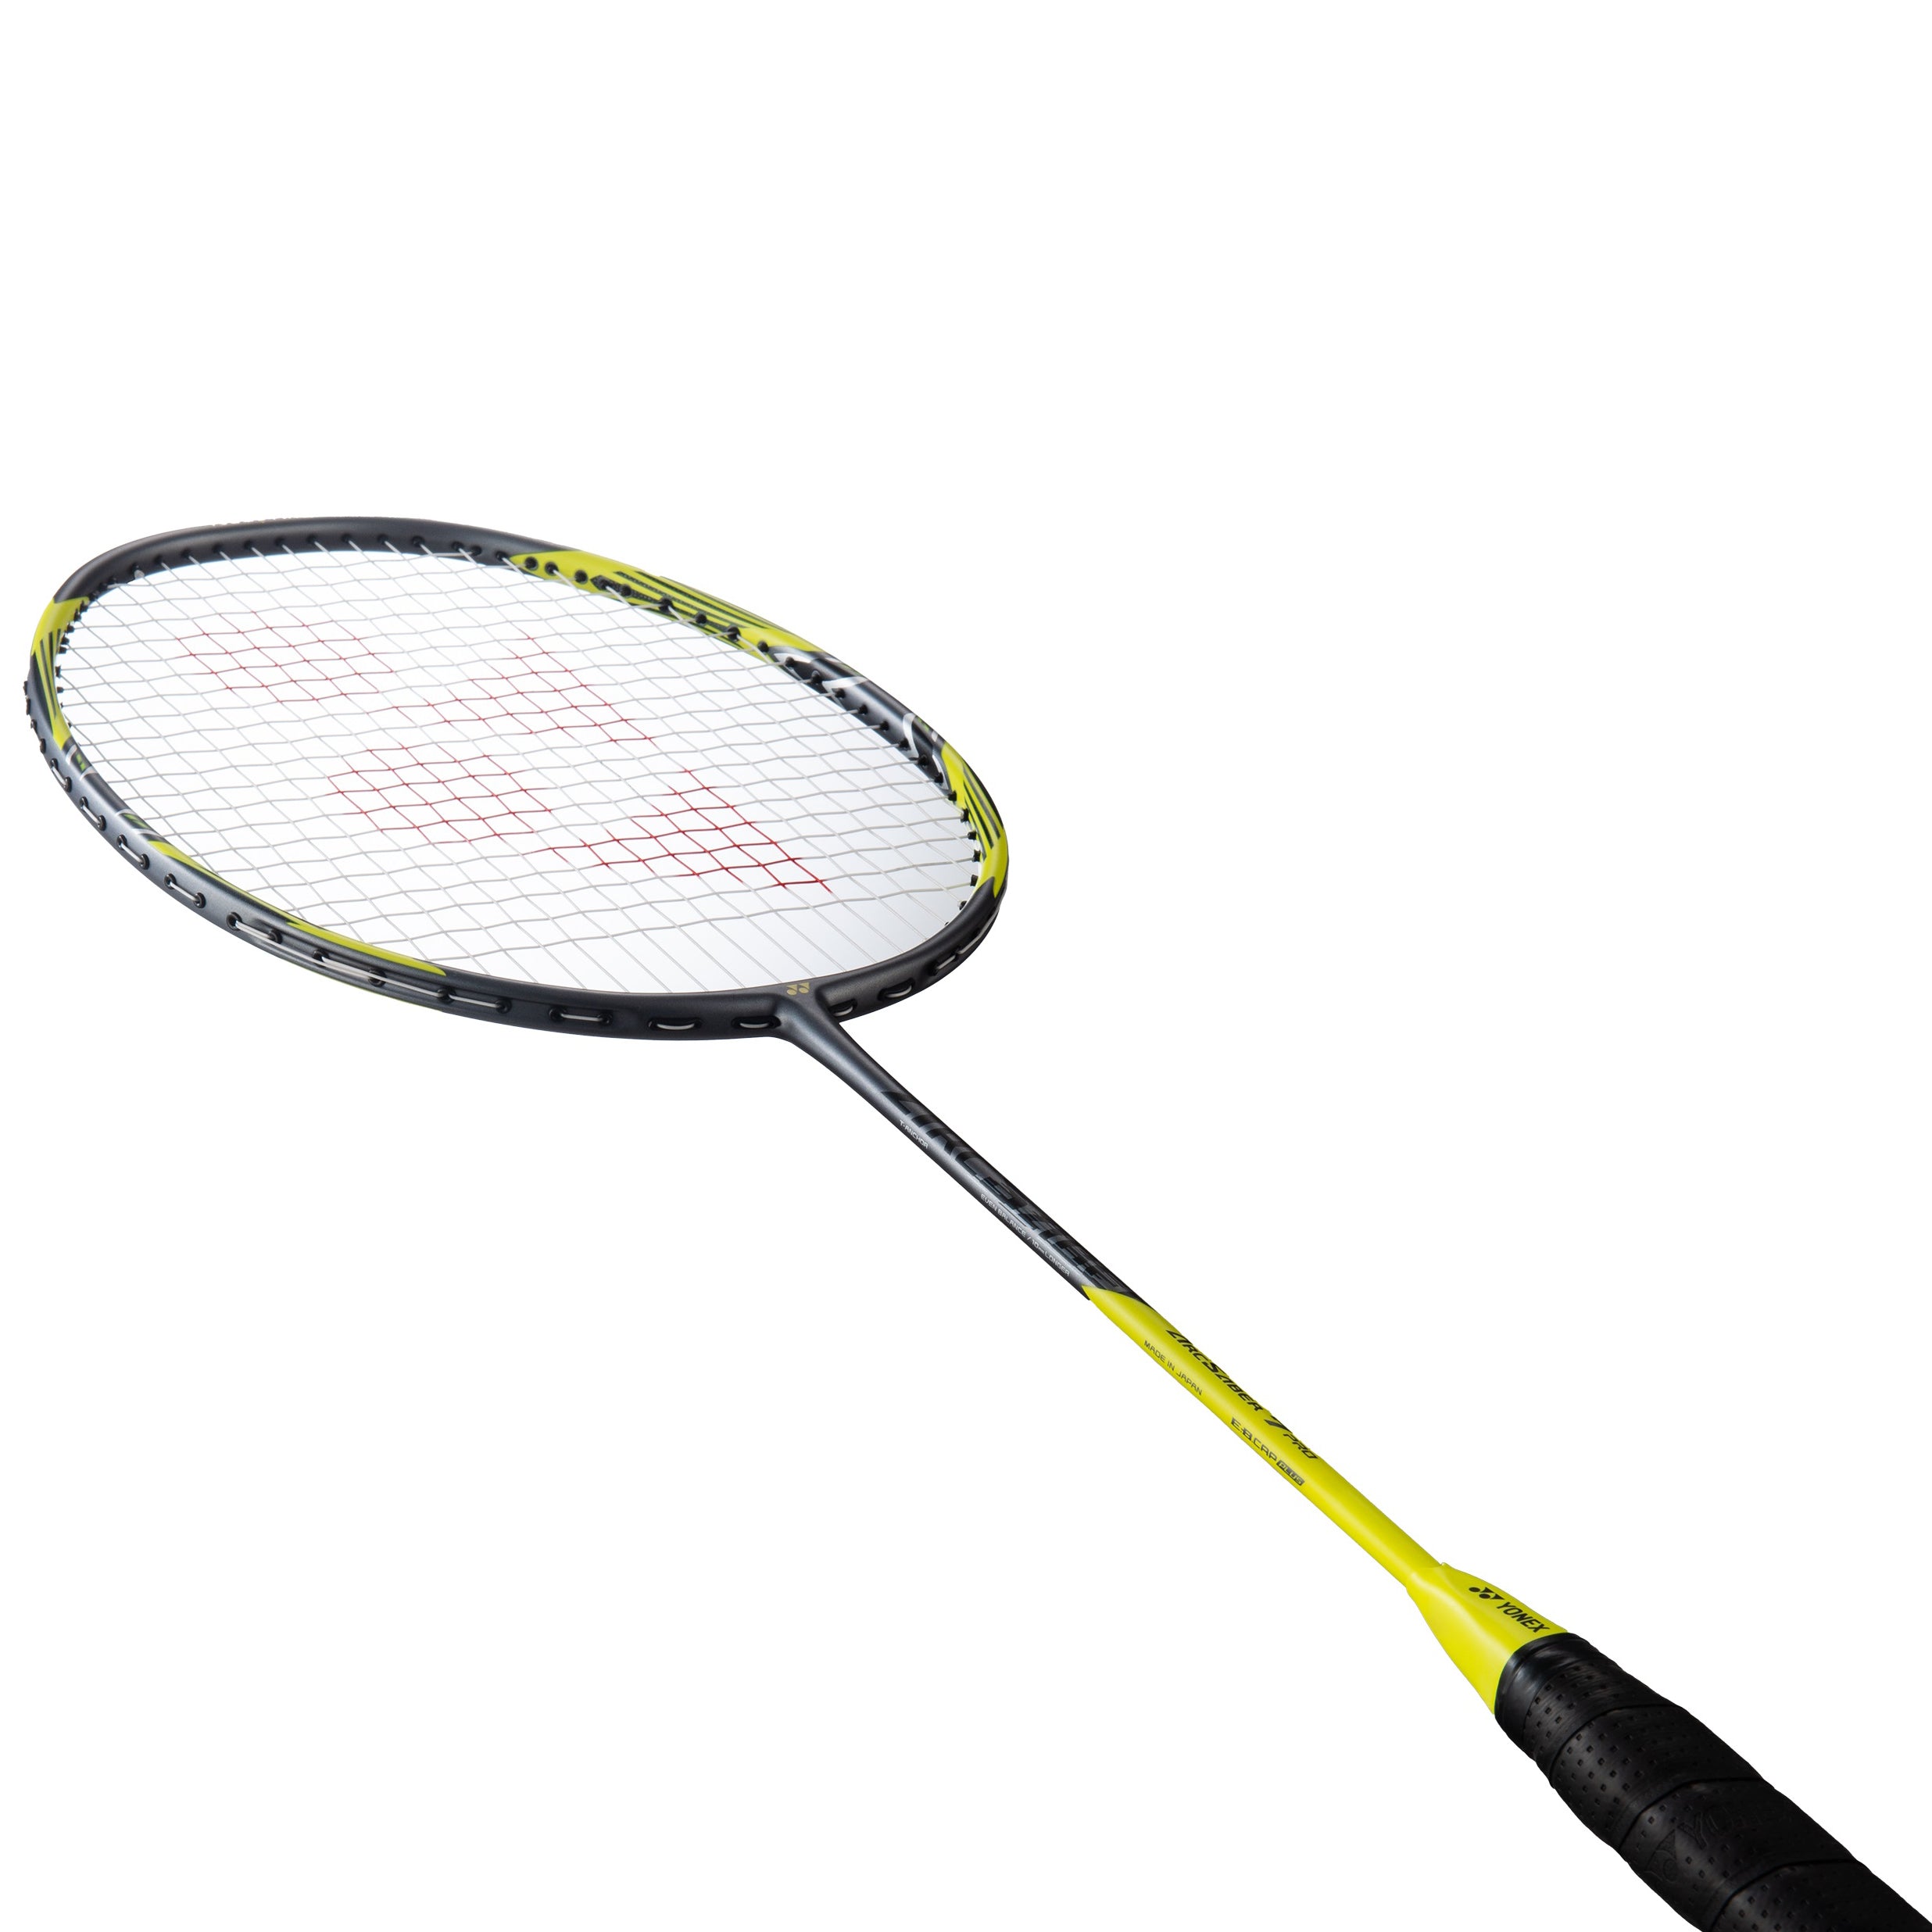 Yonex Arcsaber 7 Pro Badminton Racquet, Grey/Yellow (4UG5)